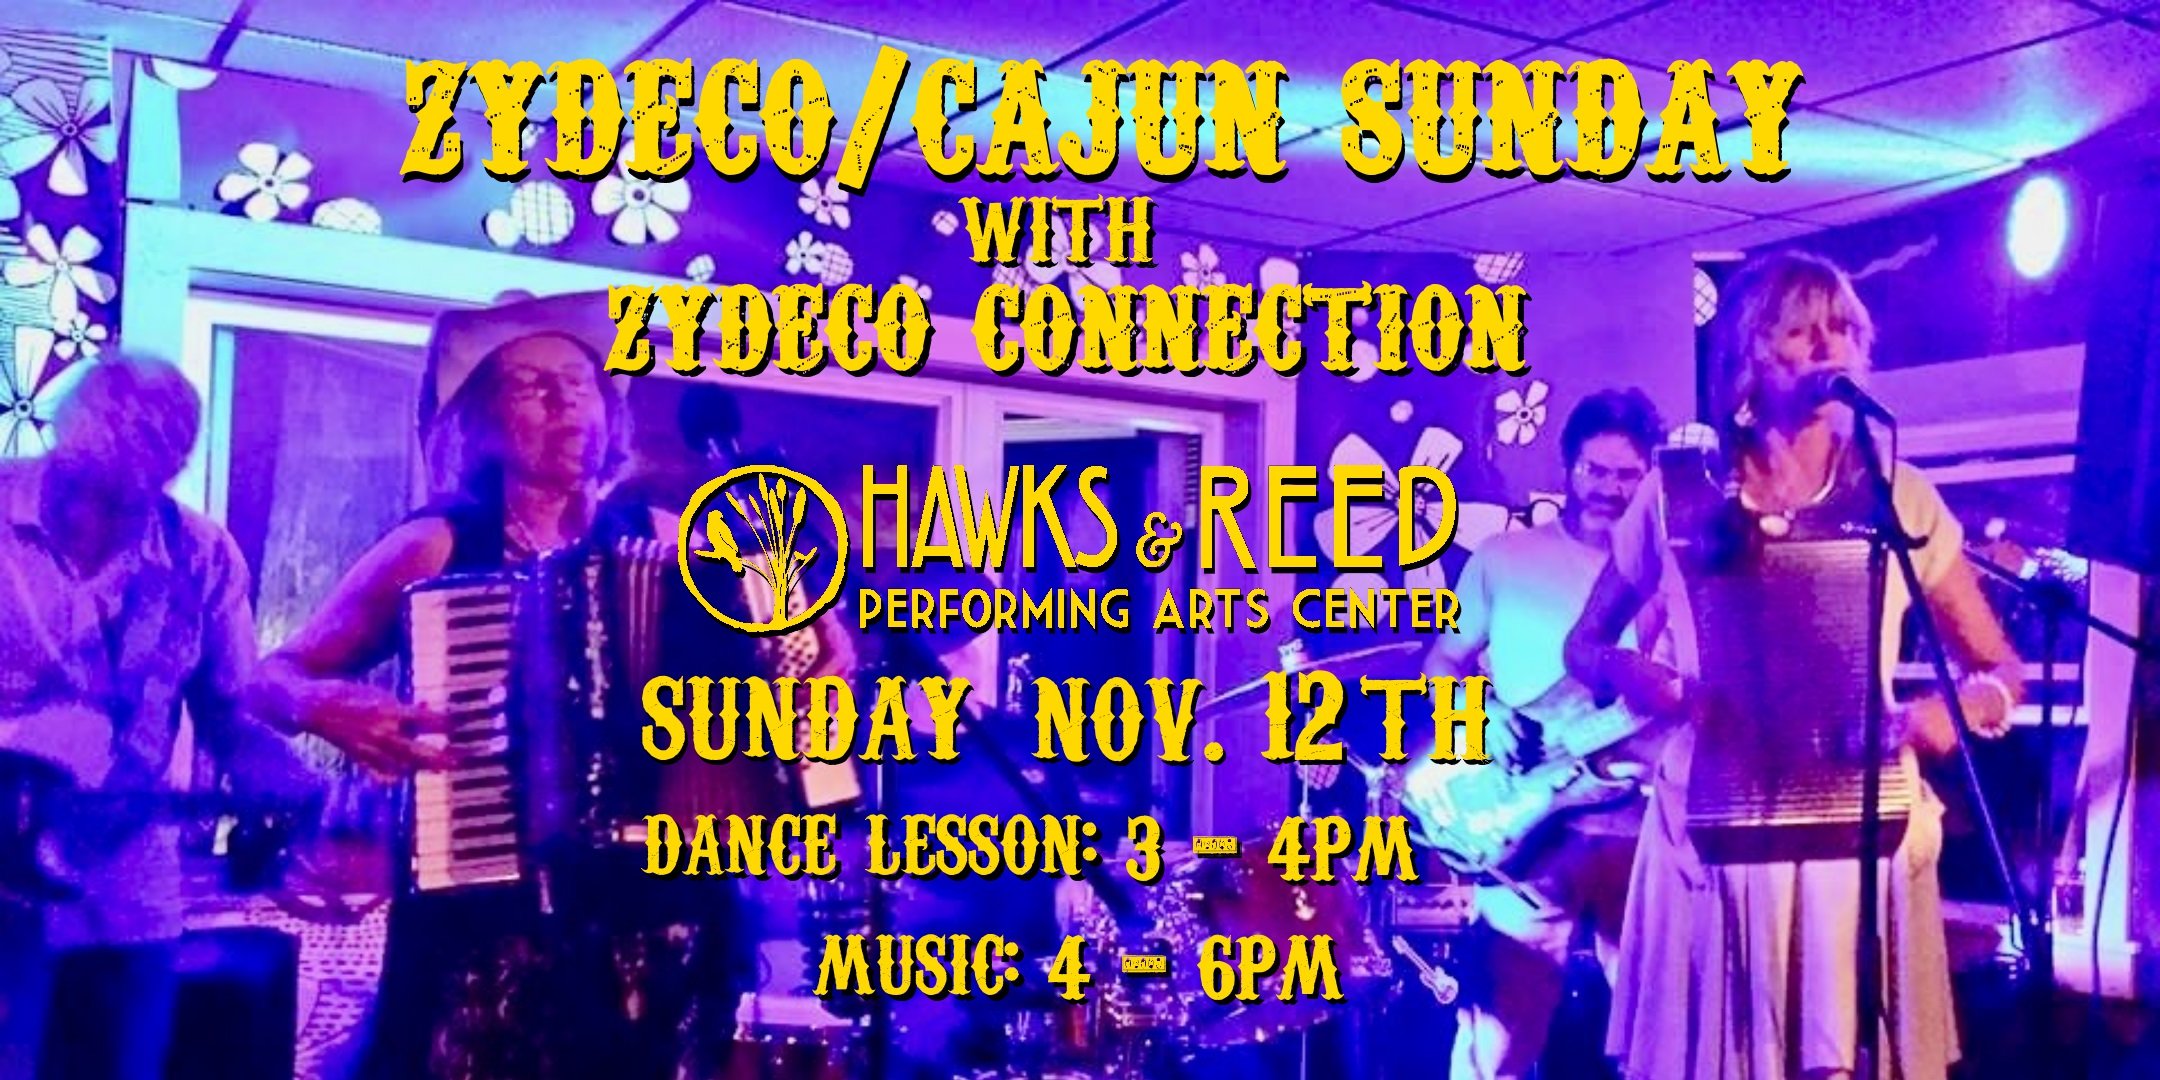 Zydeco/Cajun Sunday with Zydeco Connection